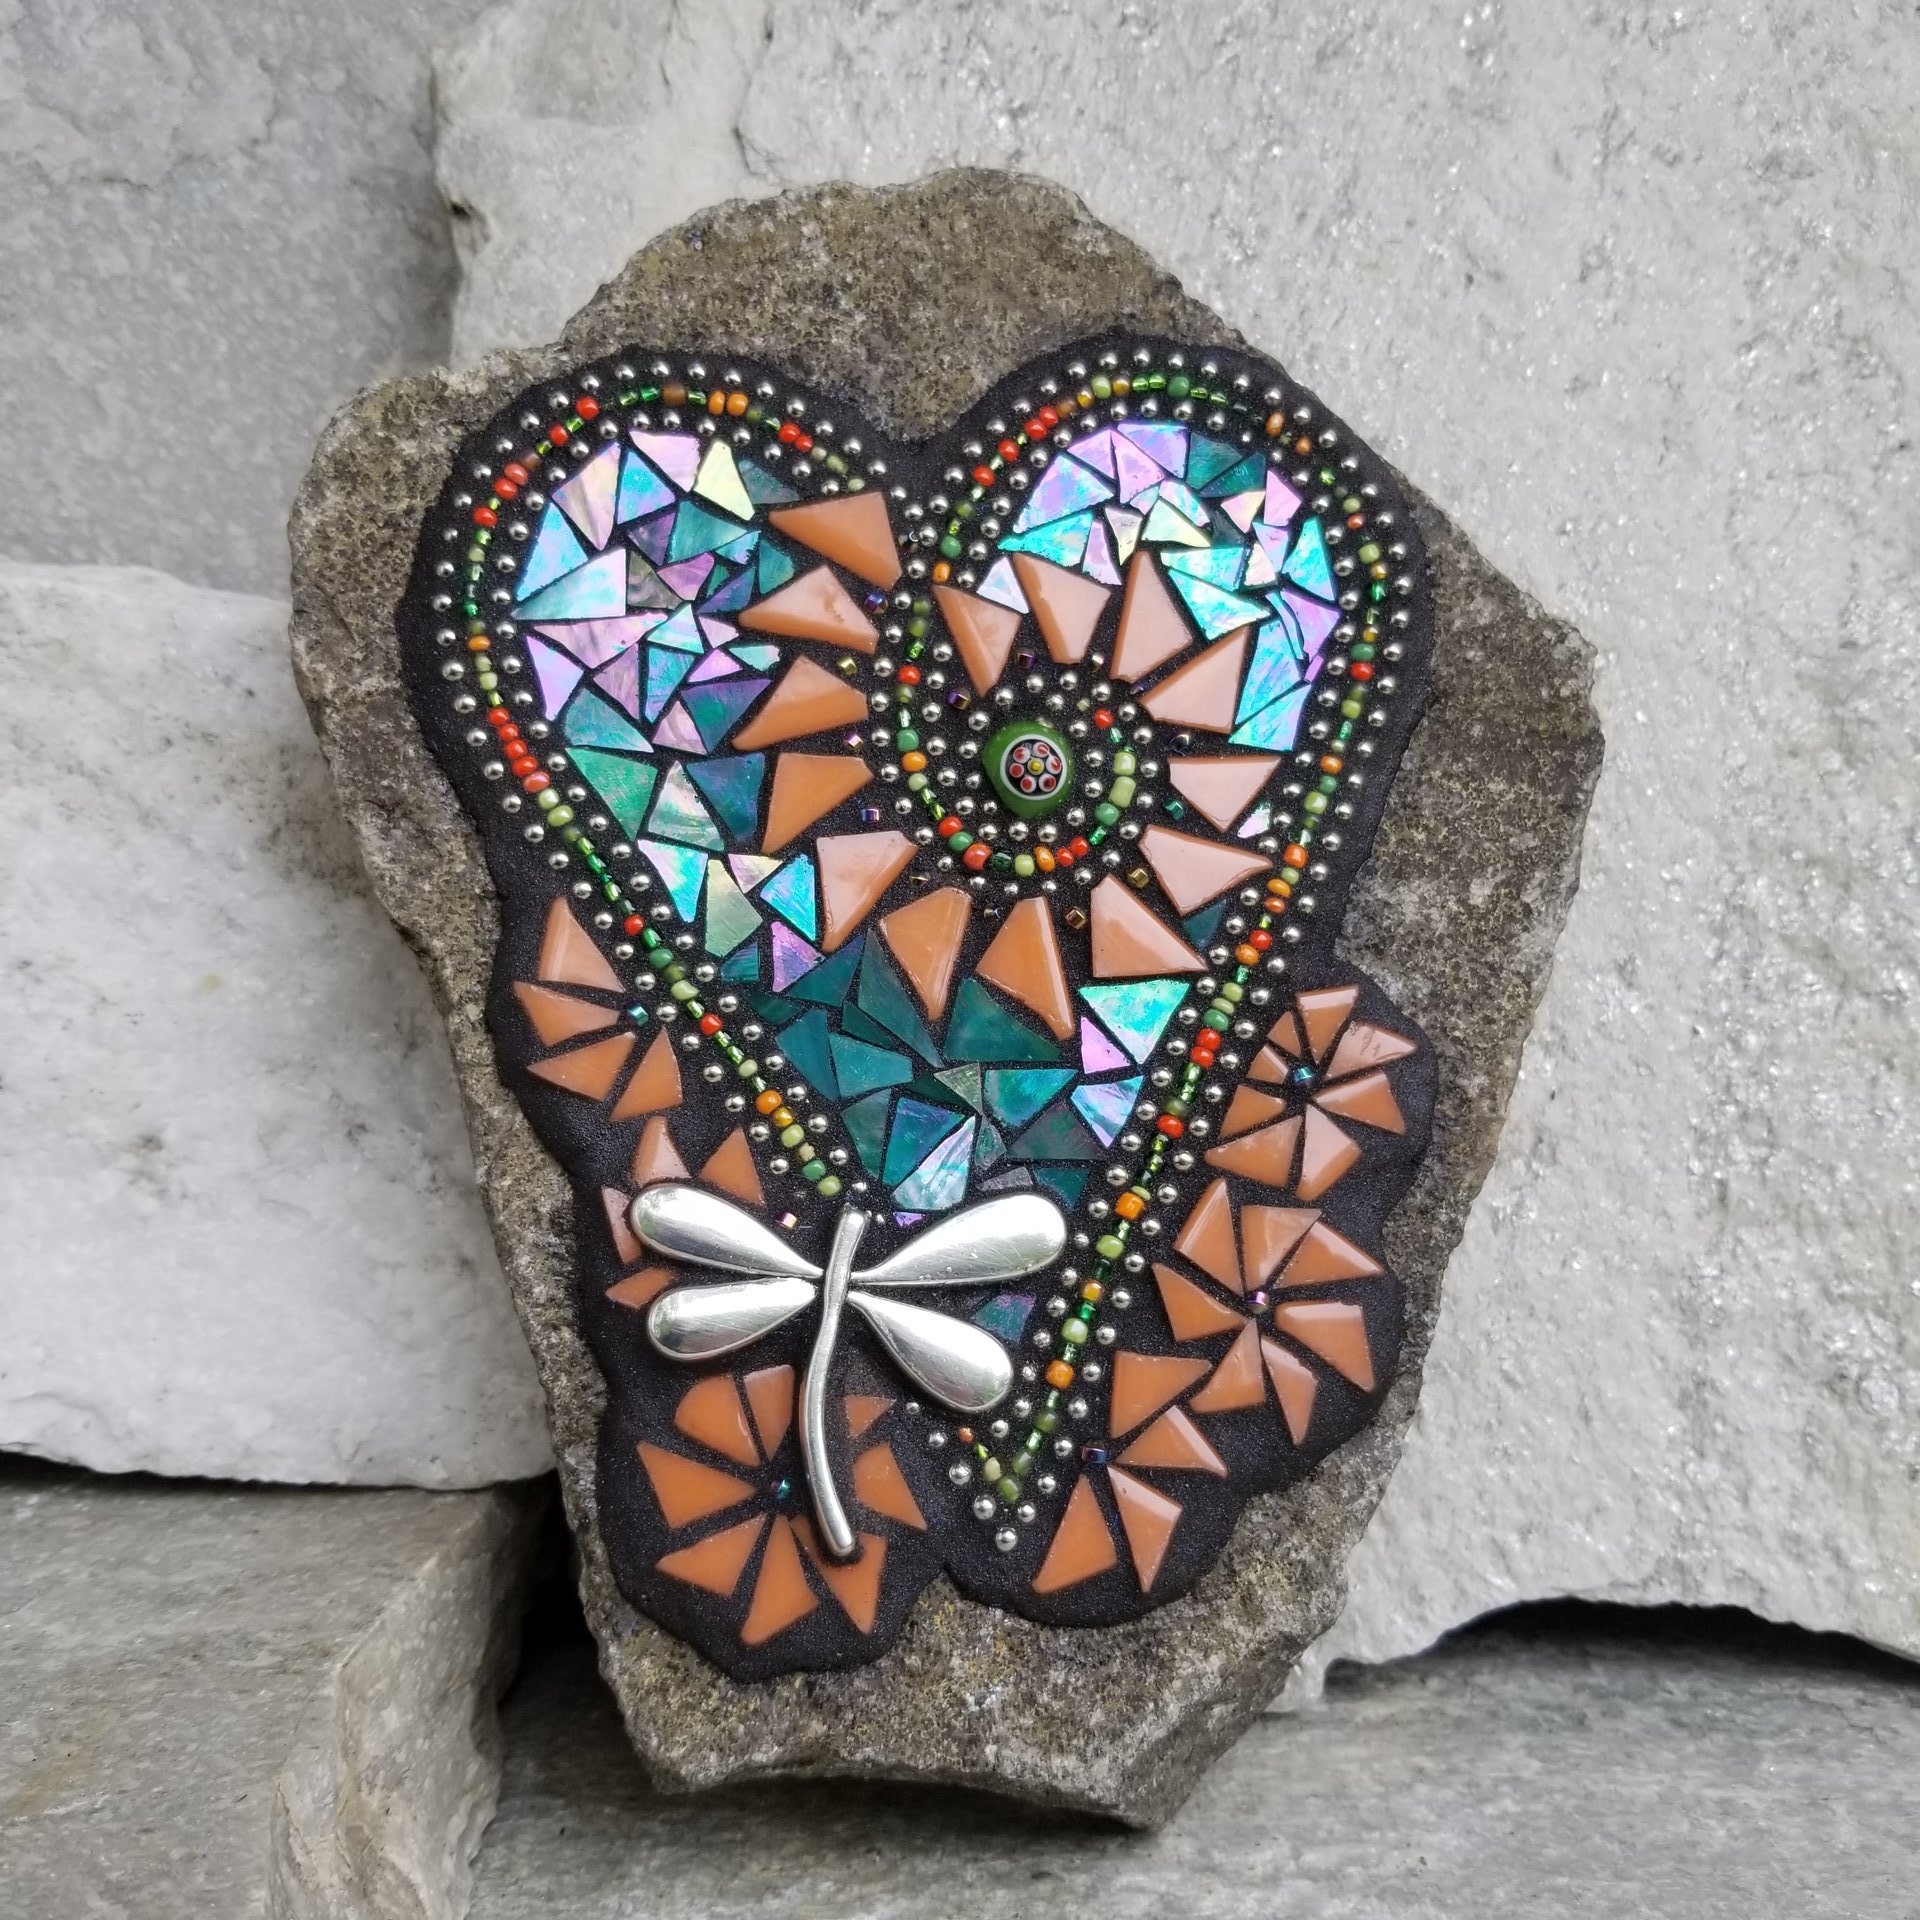 Iridescent Green Mosaic Heart Garden Stone with Orange Pinwheel Flowers